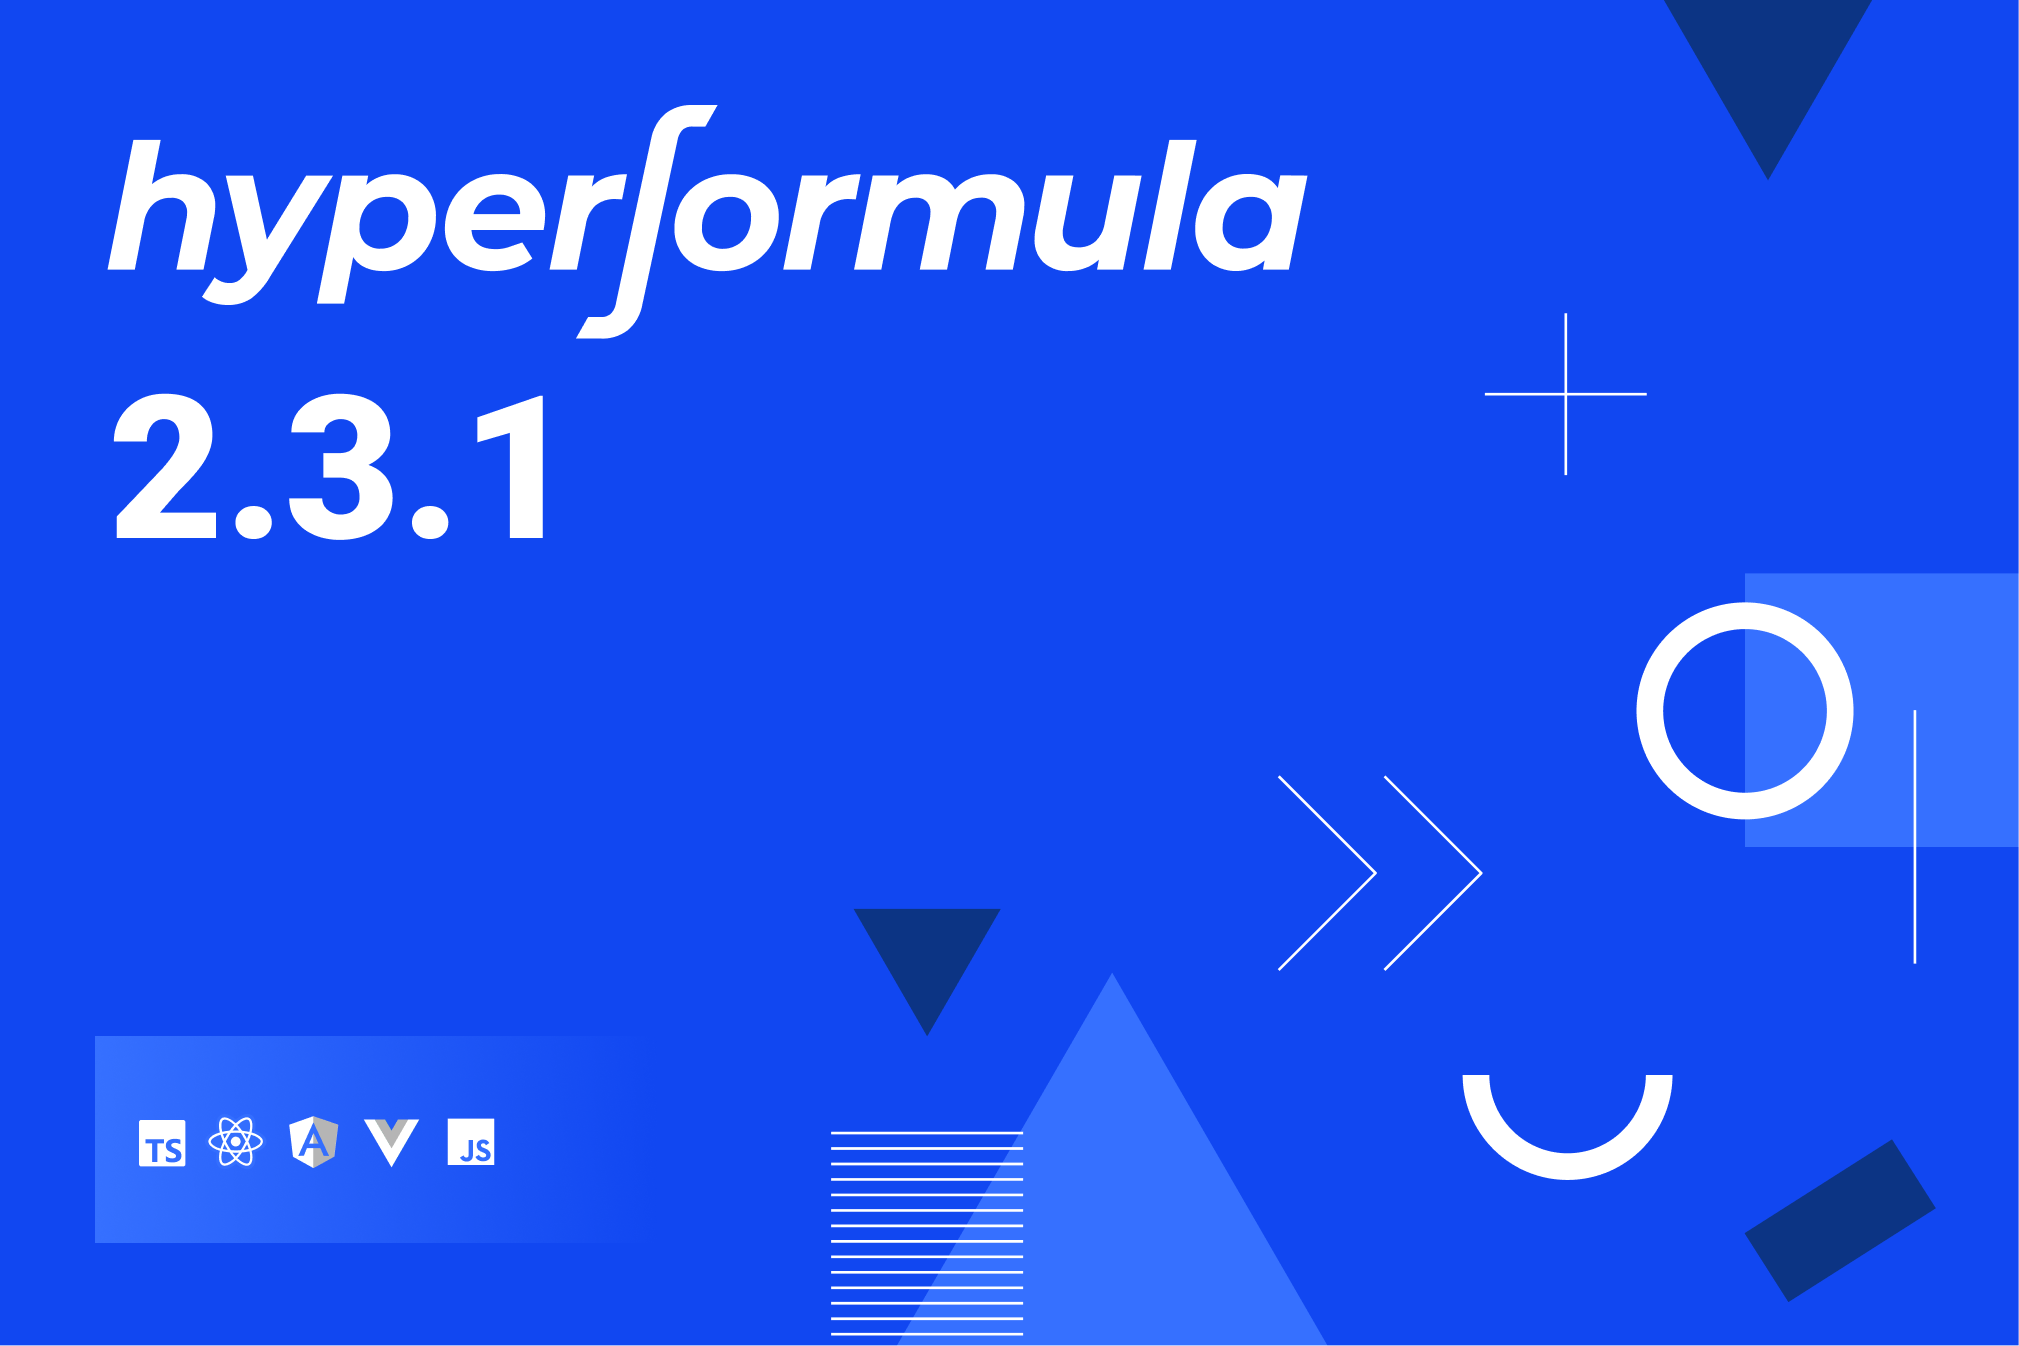 Illustration for a blog post about HyperFormula 2.3.1 release